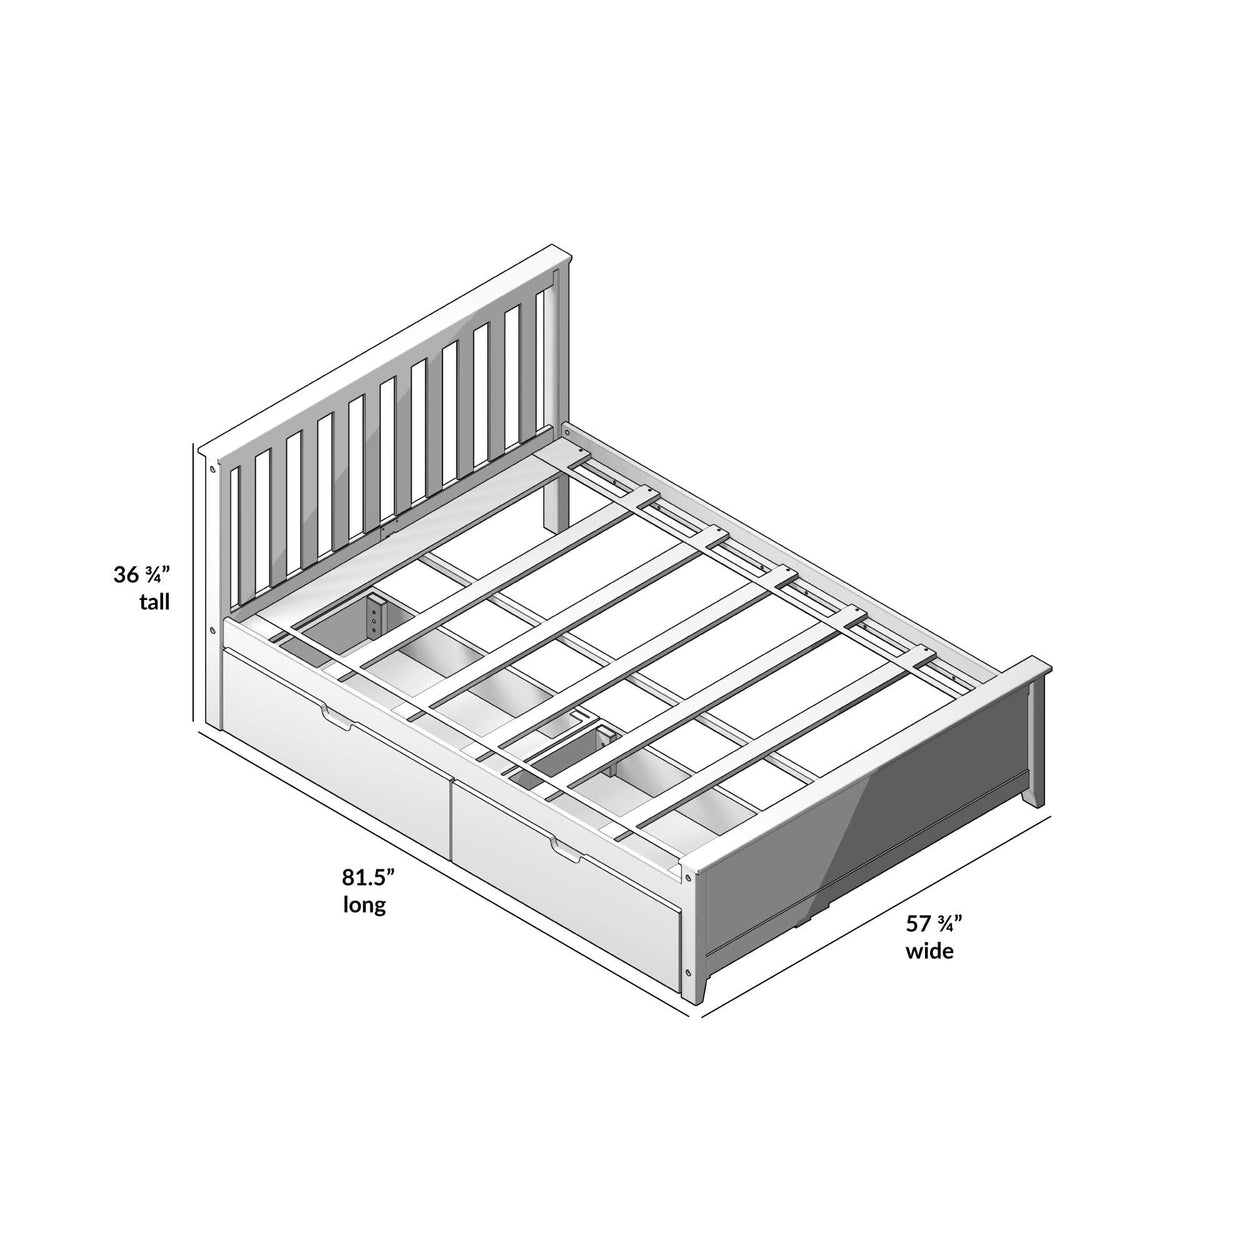 187211-131 : Kids Beds Full-Size Platform Bed with Under Bed Storage Drawers, Blue